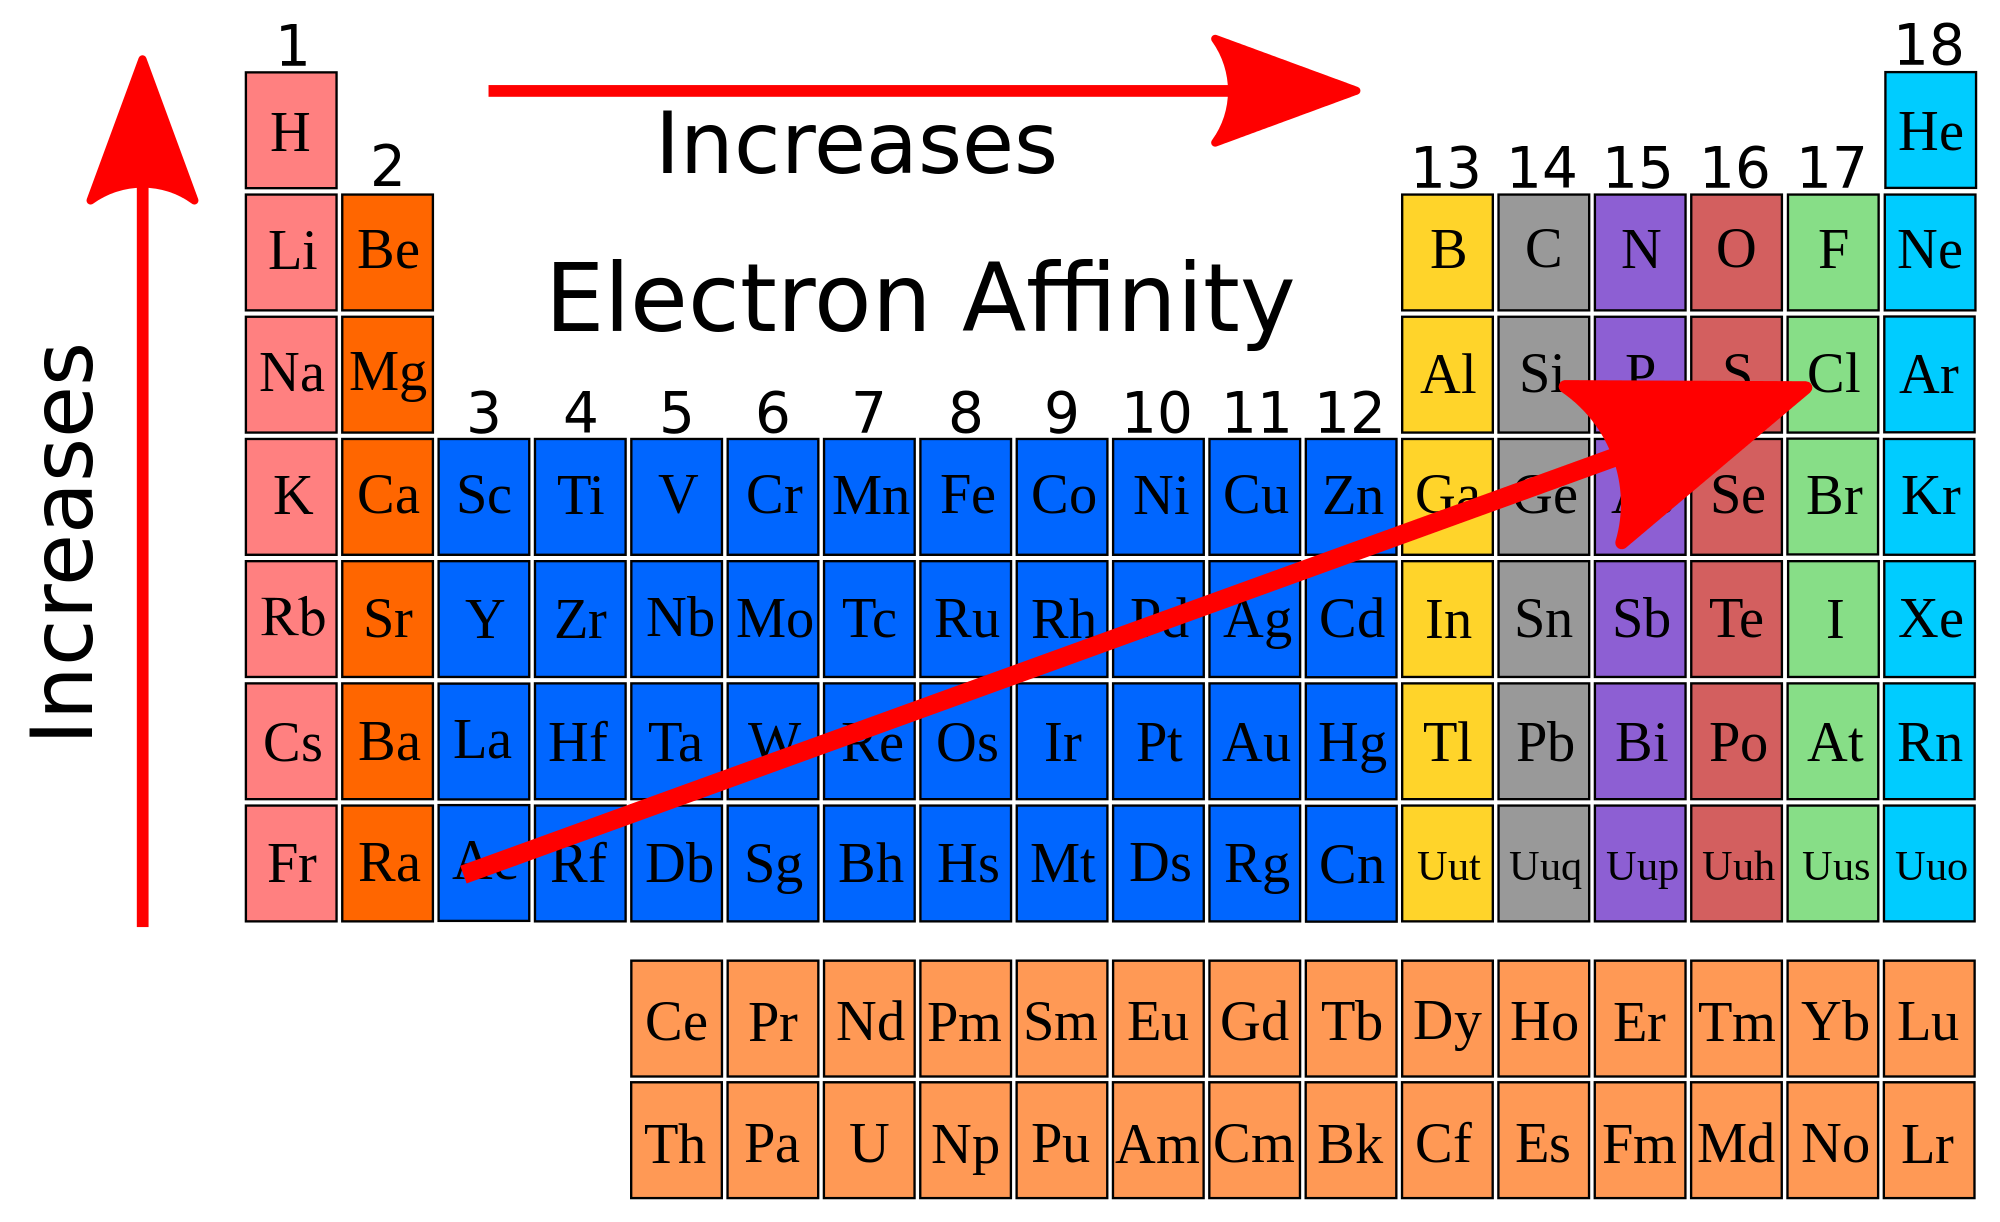 http://en.wikibooks.org/wiki/High_School_Chemistry/Electron_Affinity